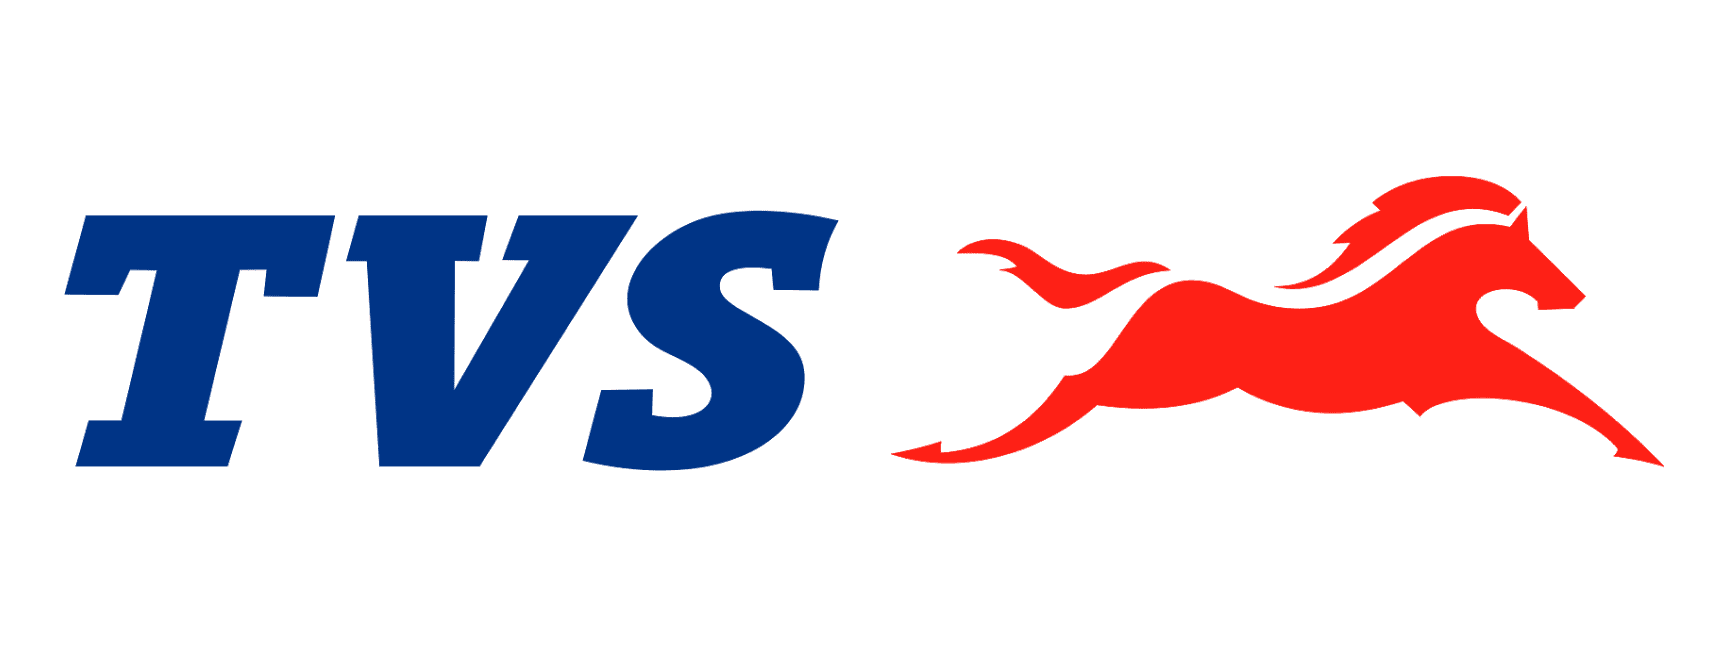 TVS Motor Company (31 Aug 2021) - Problem Statement (2)